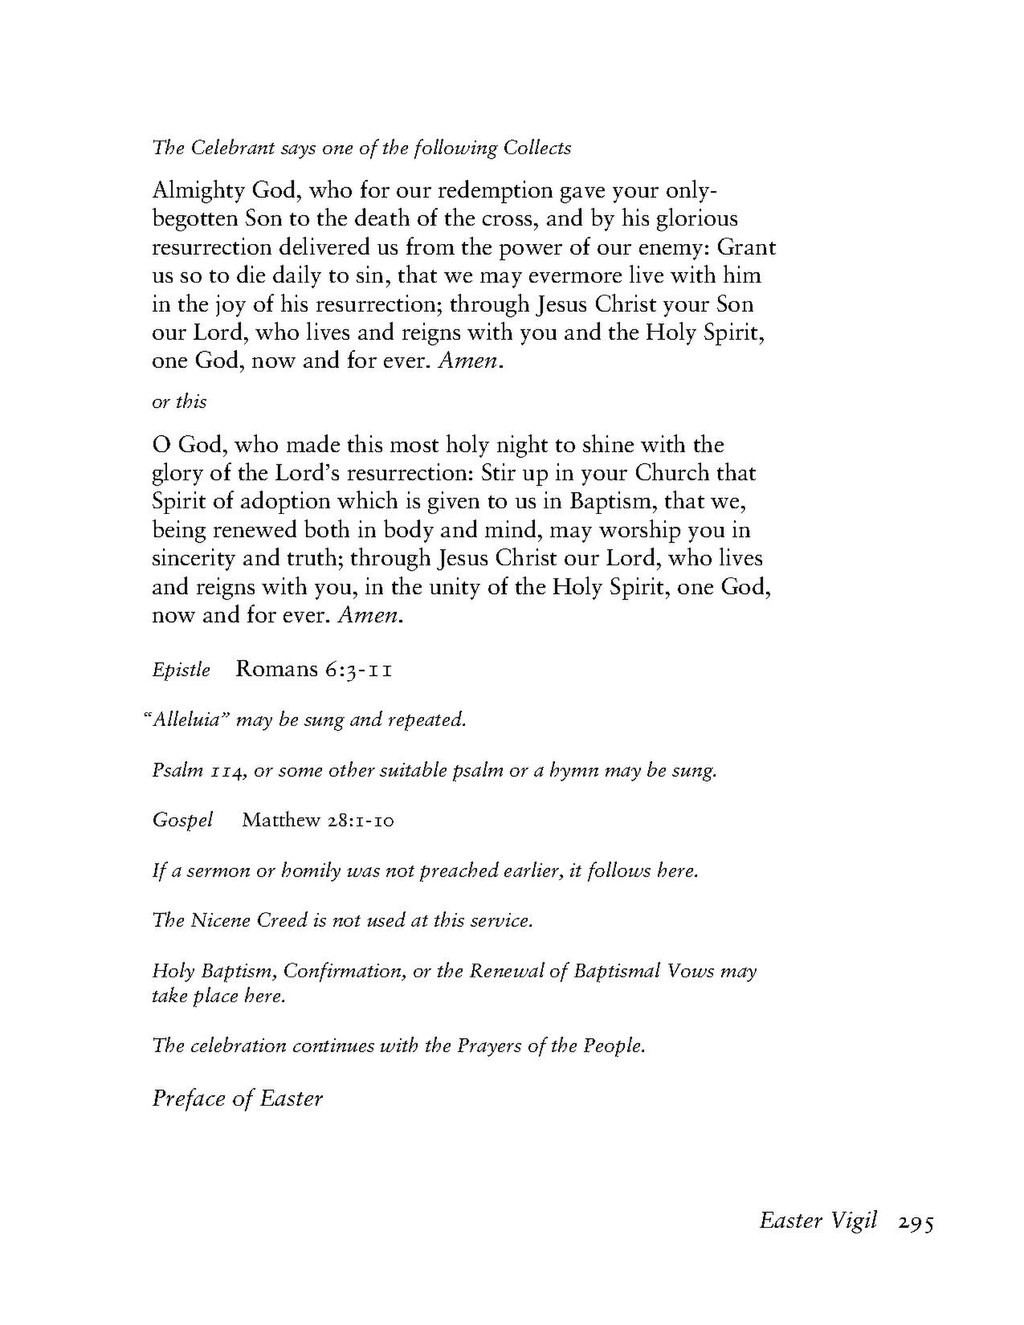 Book Of Common Prayer Wedding Vows
 Page Book of mon prayer TEC 1979 pdf 295